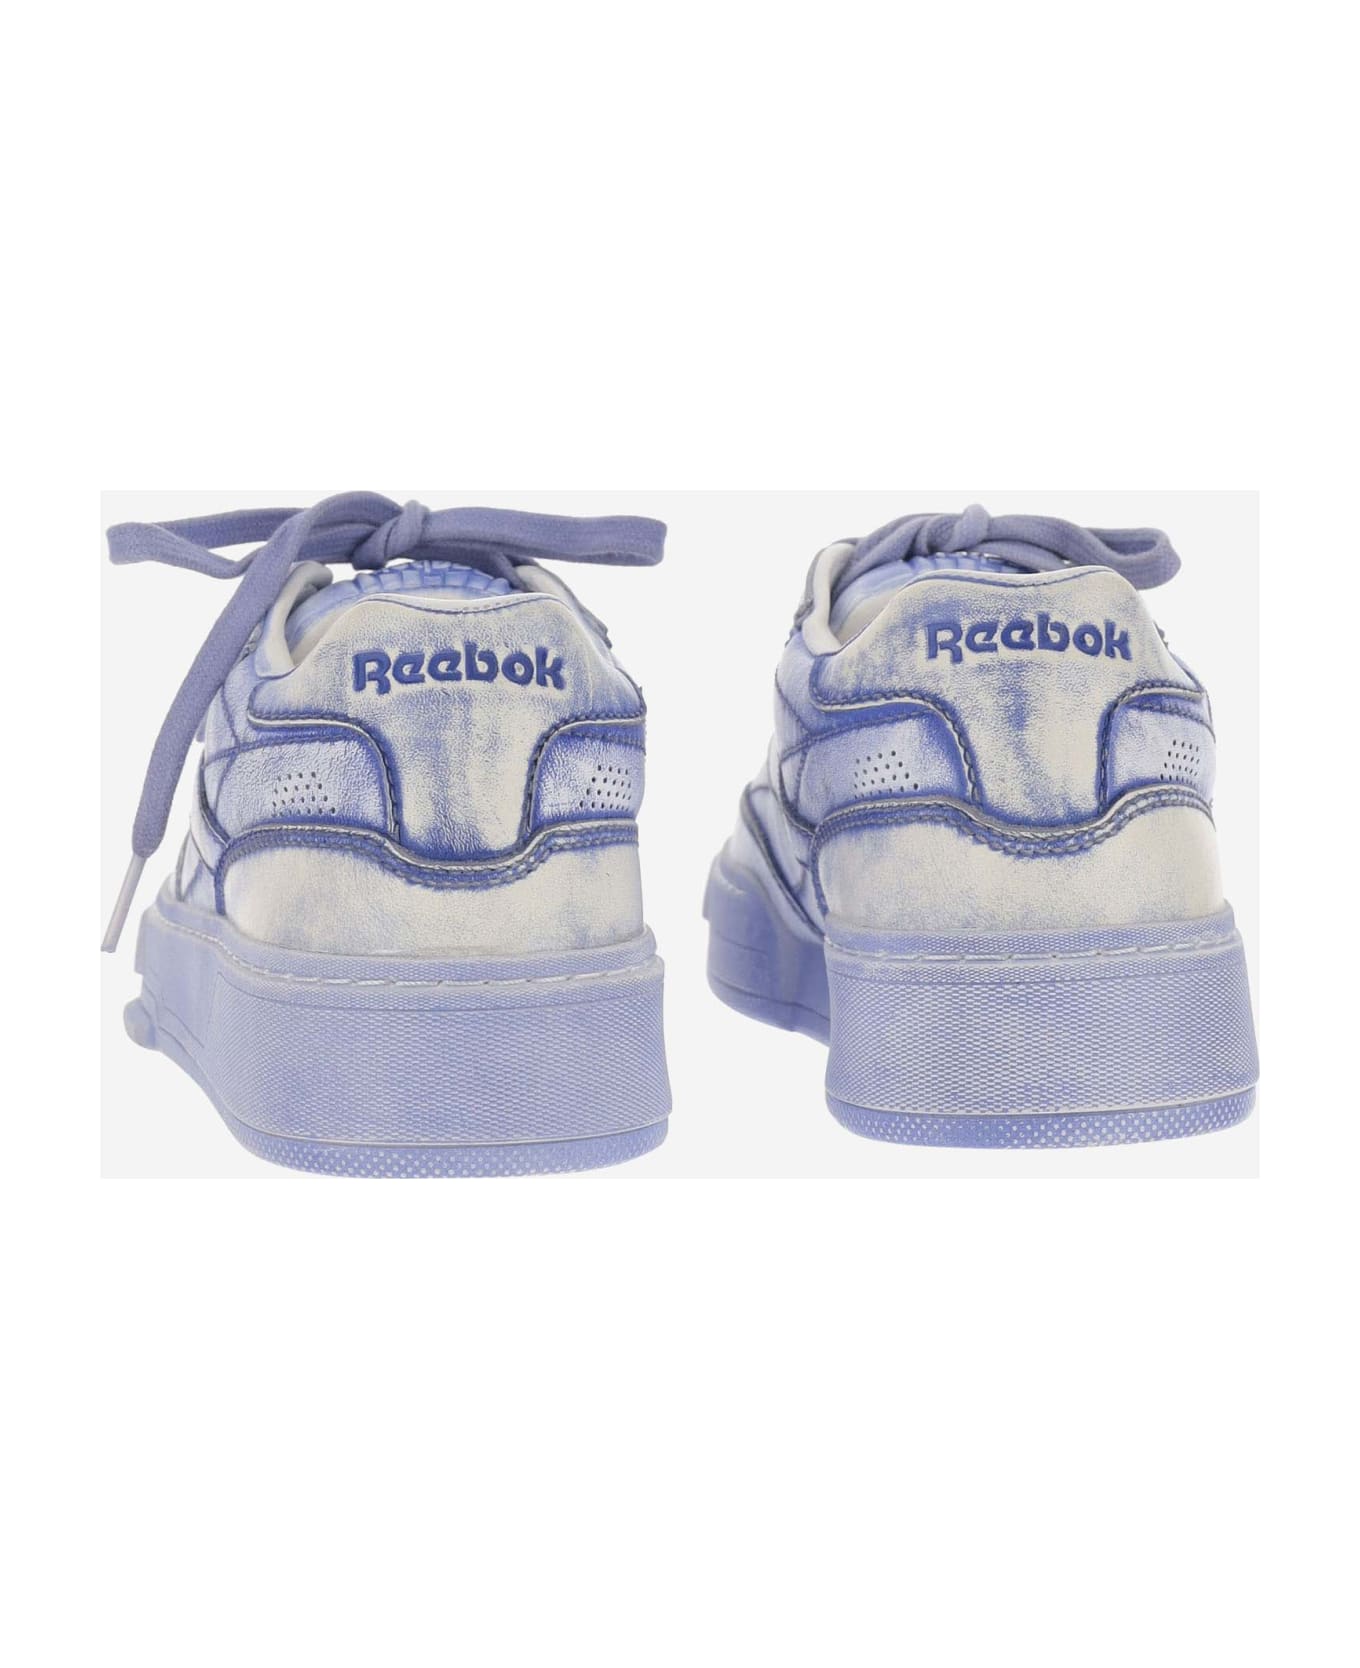 Reebok Club C Ltd Leather Sneakers - Blue